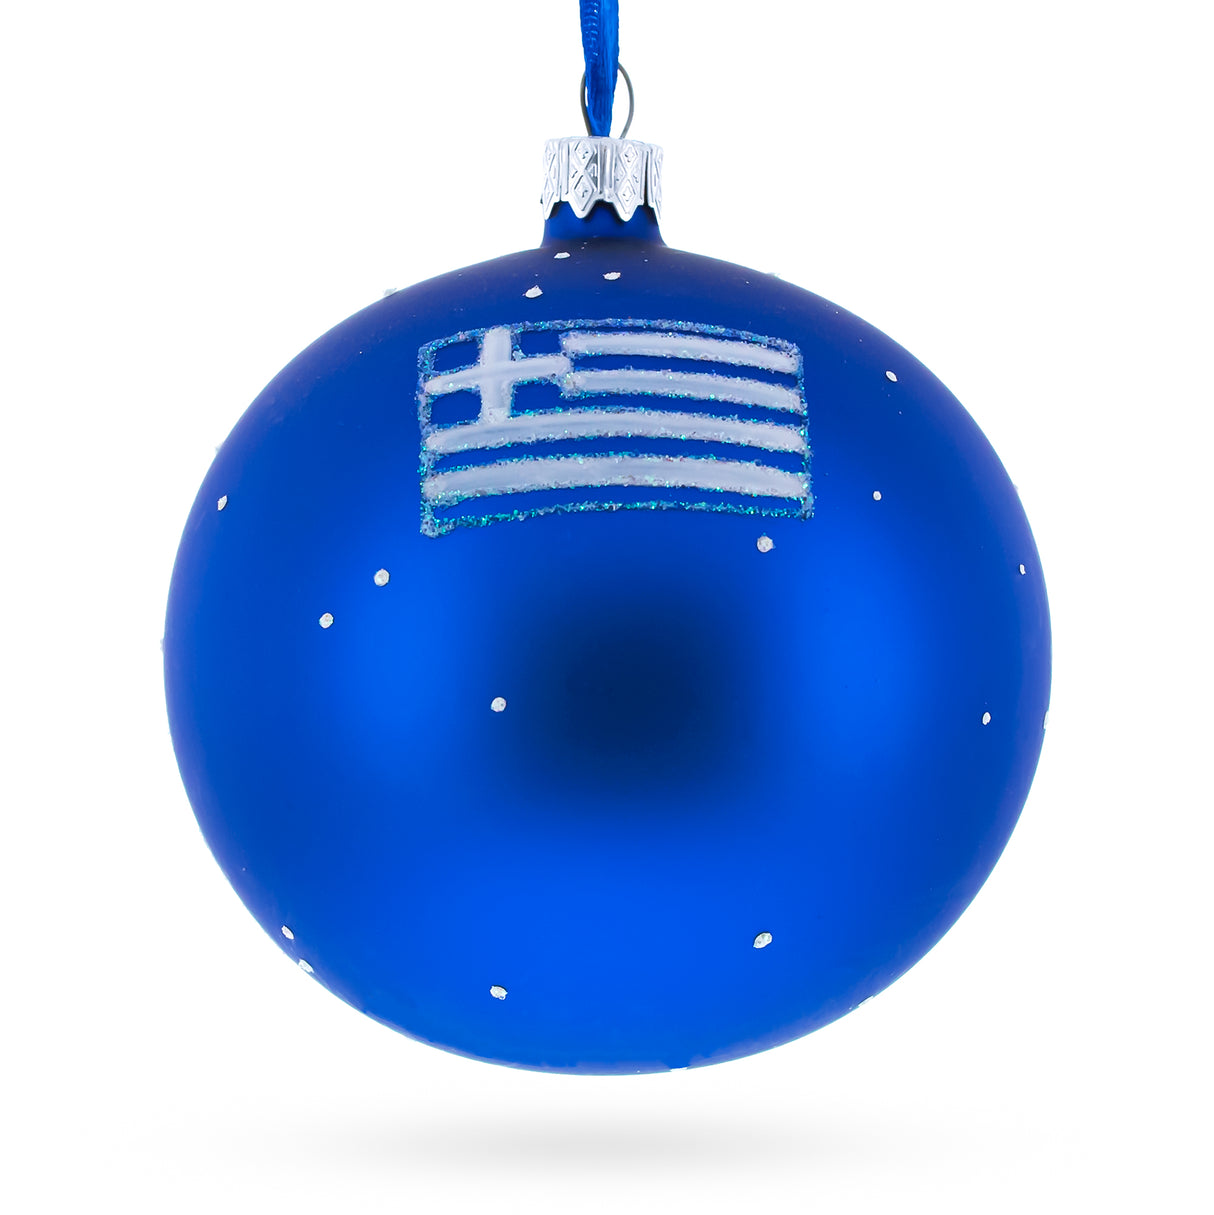 Buy Christmas Ornaments Travel Europe Greece Wonders of the World by BestPysanky Online Gift Ship